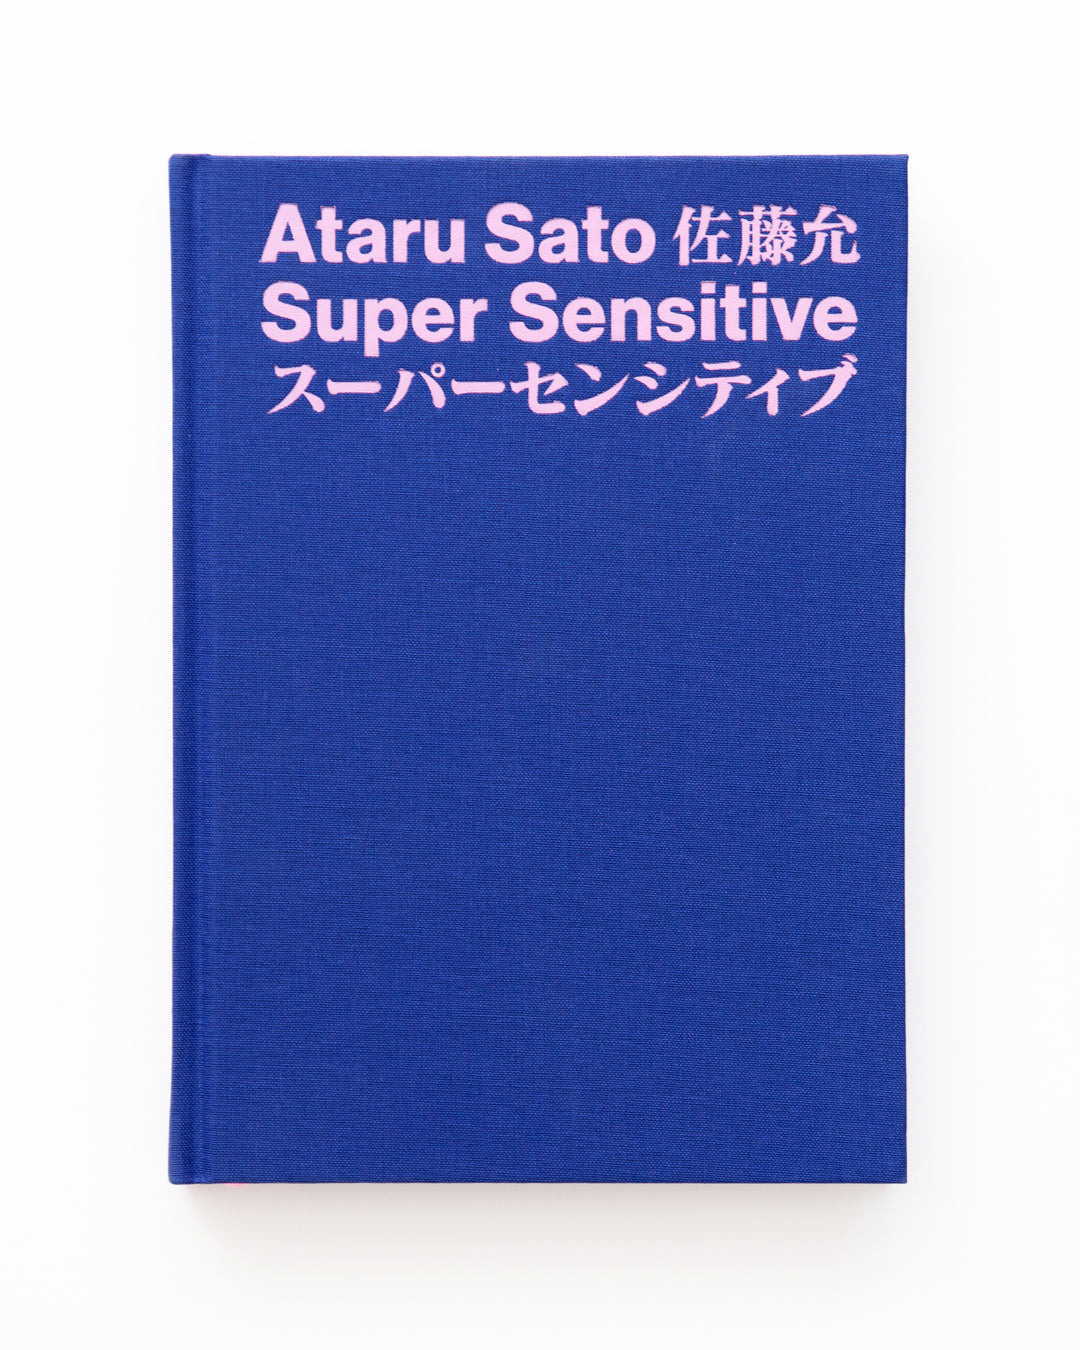 Ataru Sato - Super Sensitive